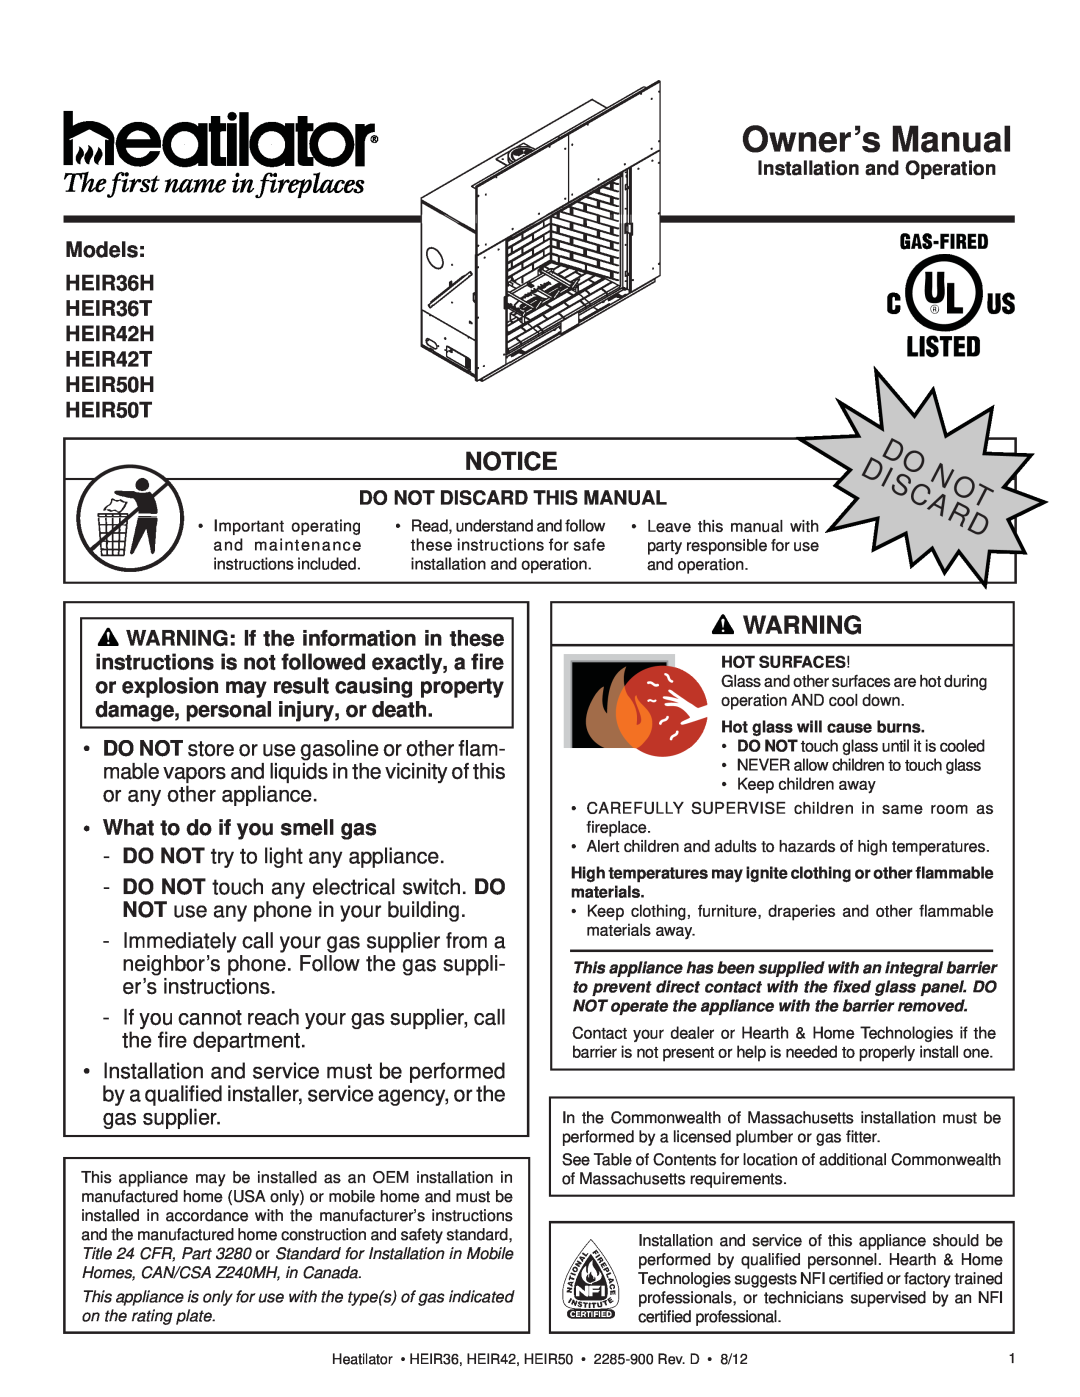 Heatiator owner manual Notice, Models HEIR36H HEIR36T HEIR42H HEIR42T HEIR50H, HEIR50T, •What to do if you smell gas 